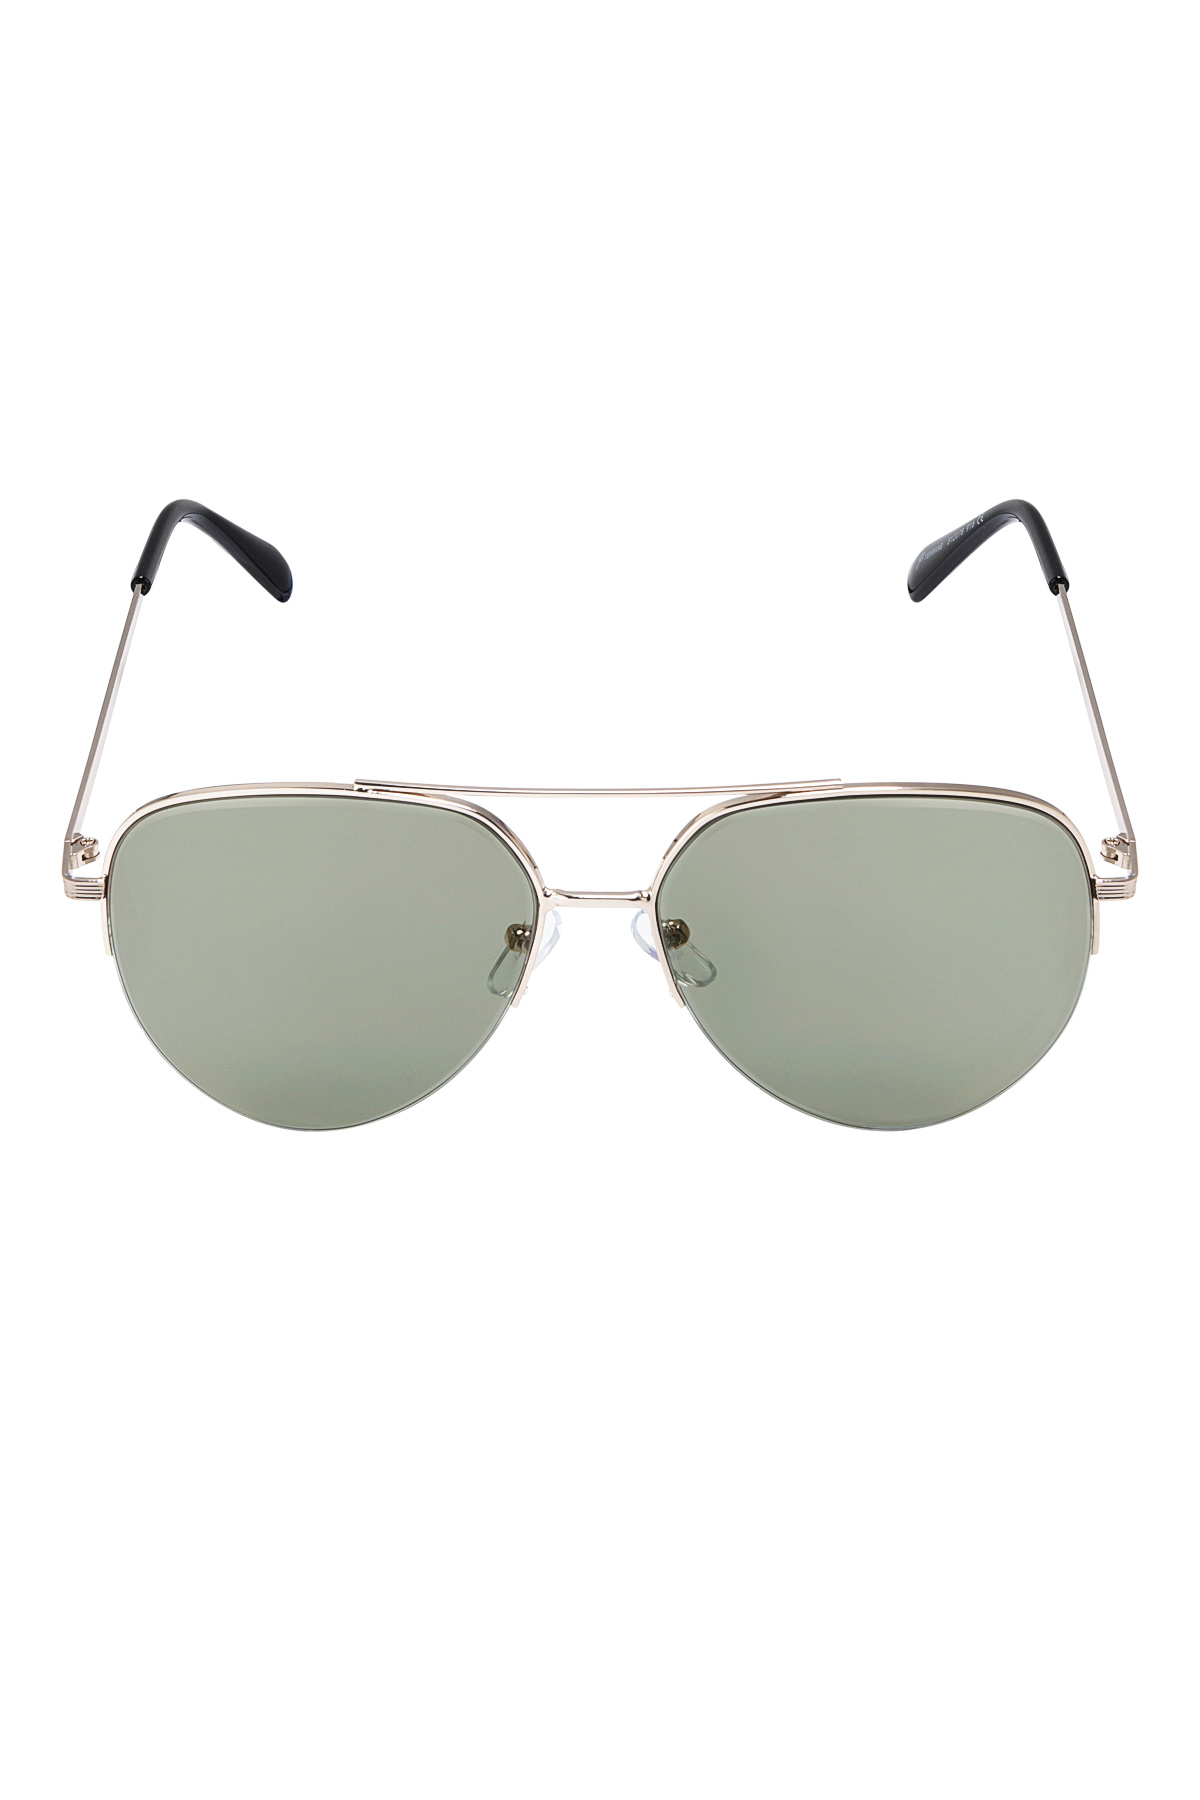 Aviator style sunglasses - gray gold Picture5